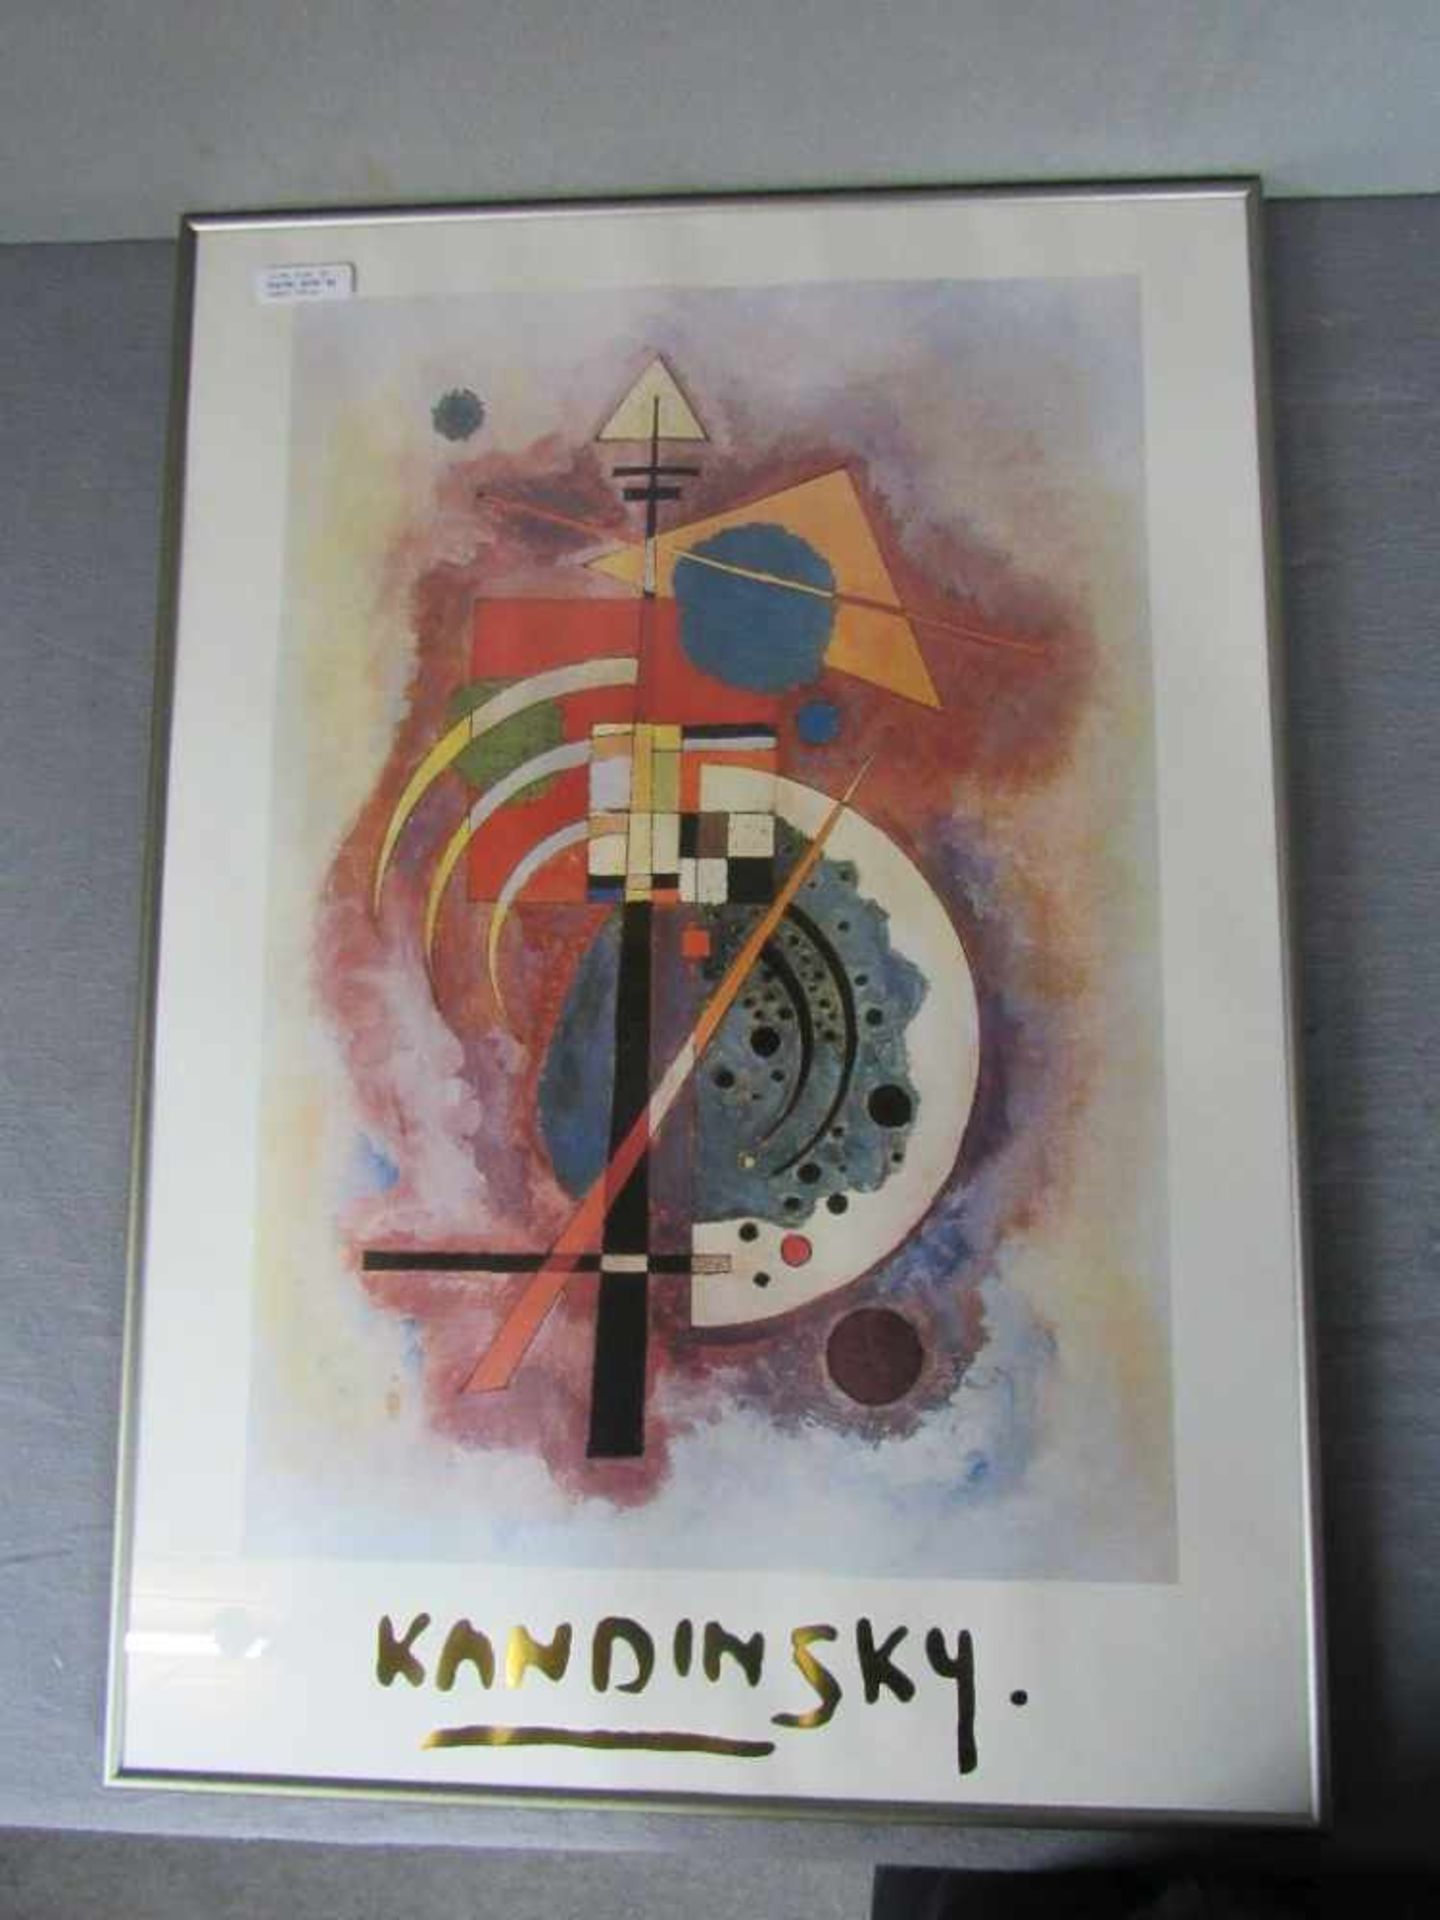 Kunstdruck Kandinsky 80x57cm- - -20.00 % buyer's premium on the hammer price19.00 % VAT on buyer's